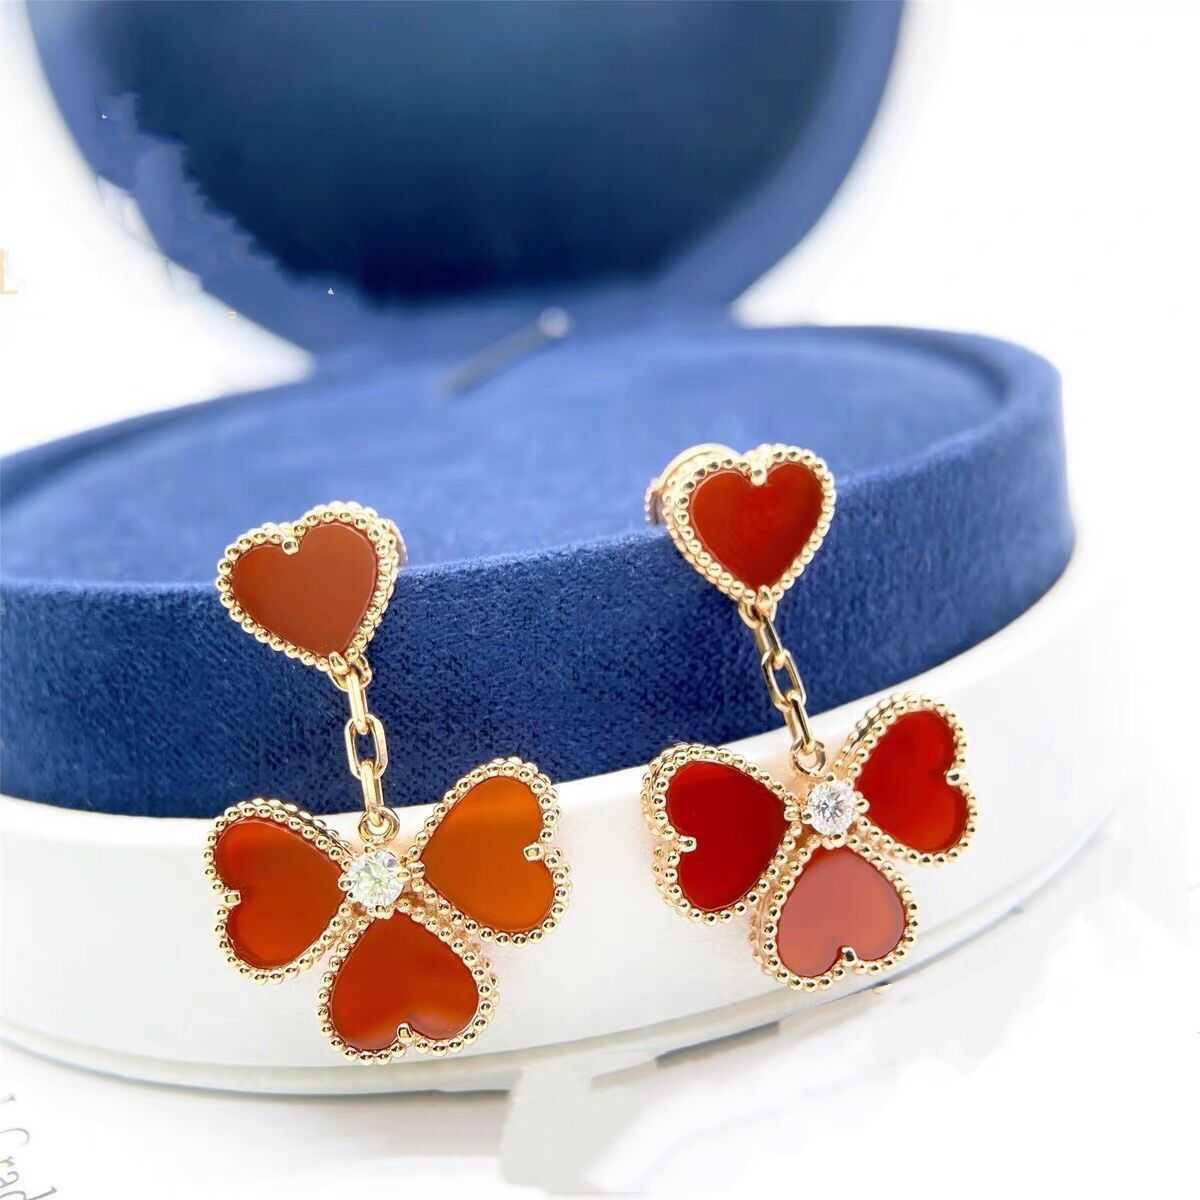 Designer hot selling Van Heart shaped Earrings 925 Pure Silver Plated 18K Gold Four Red Jade Marrow Peach Love Tassel jewelry